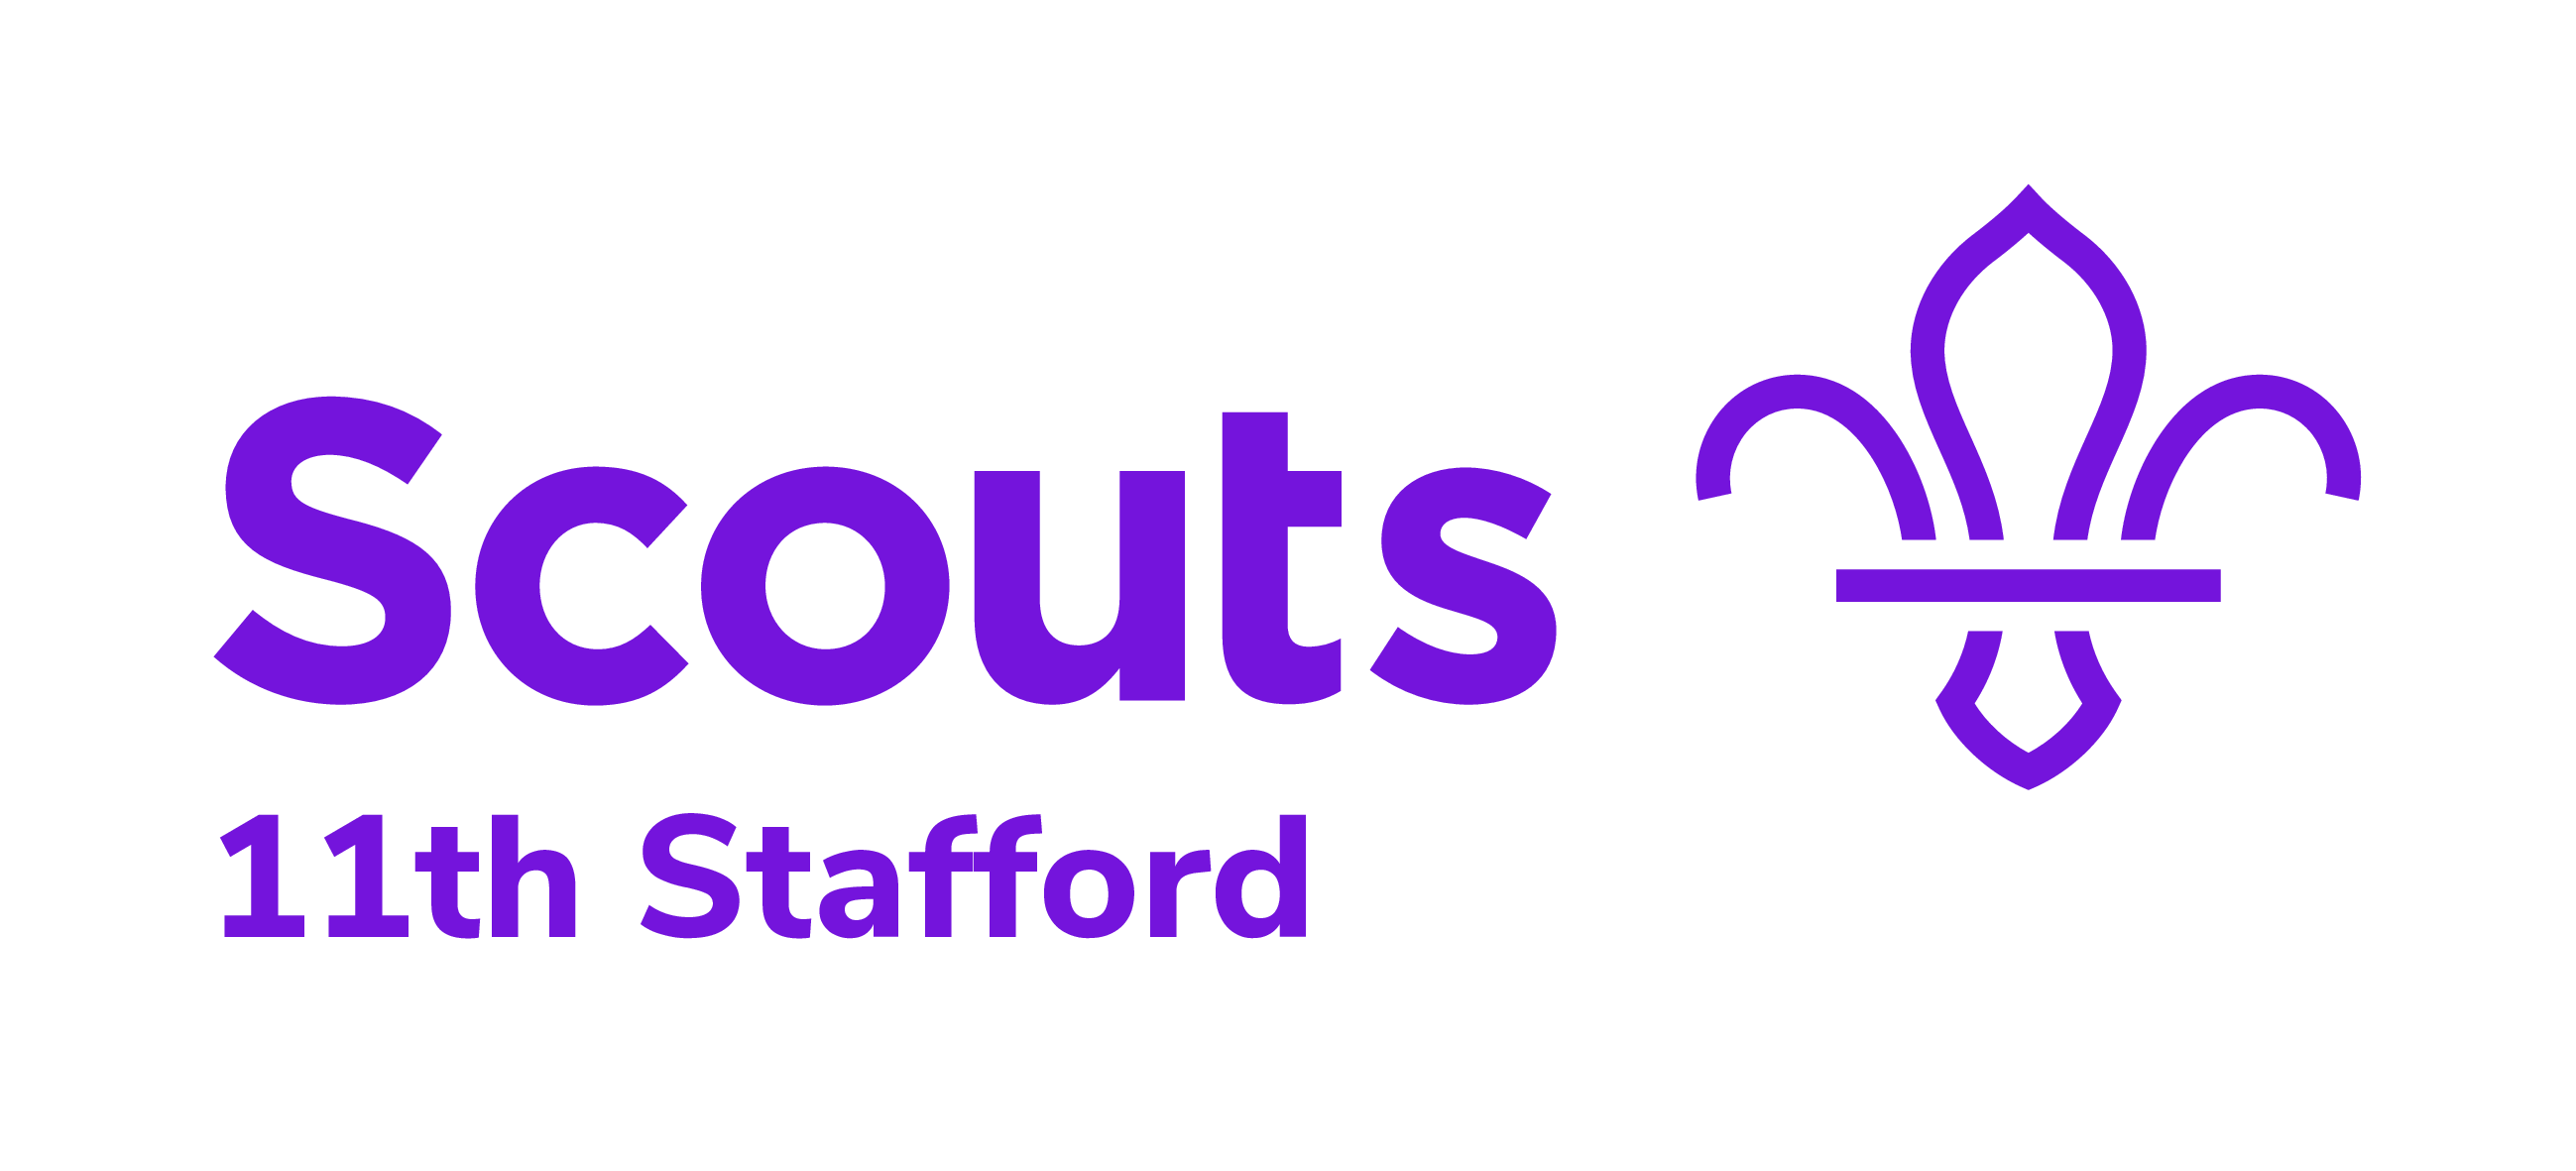 11th Stafford Scouts logo